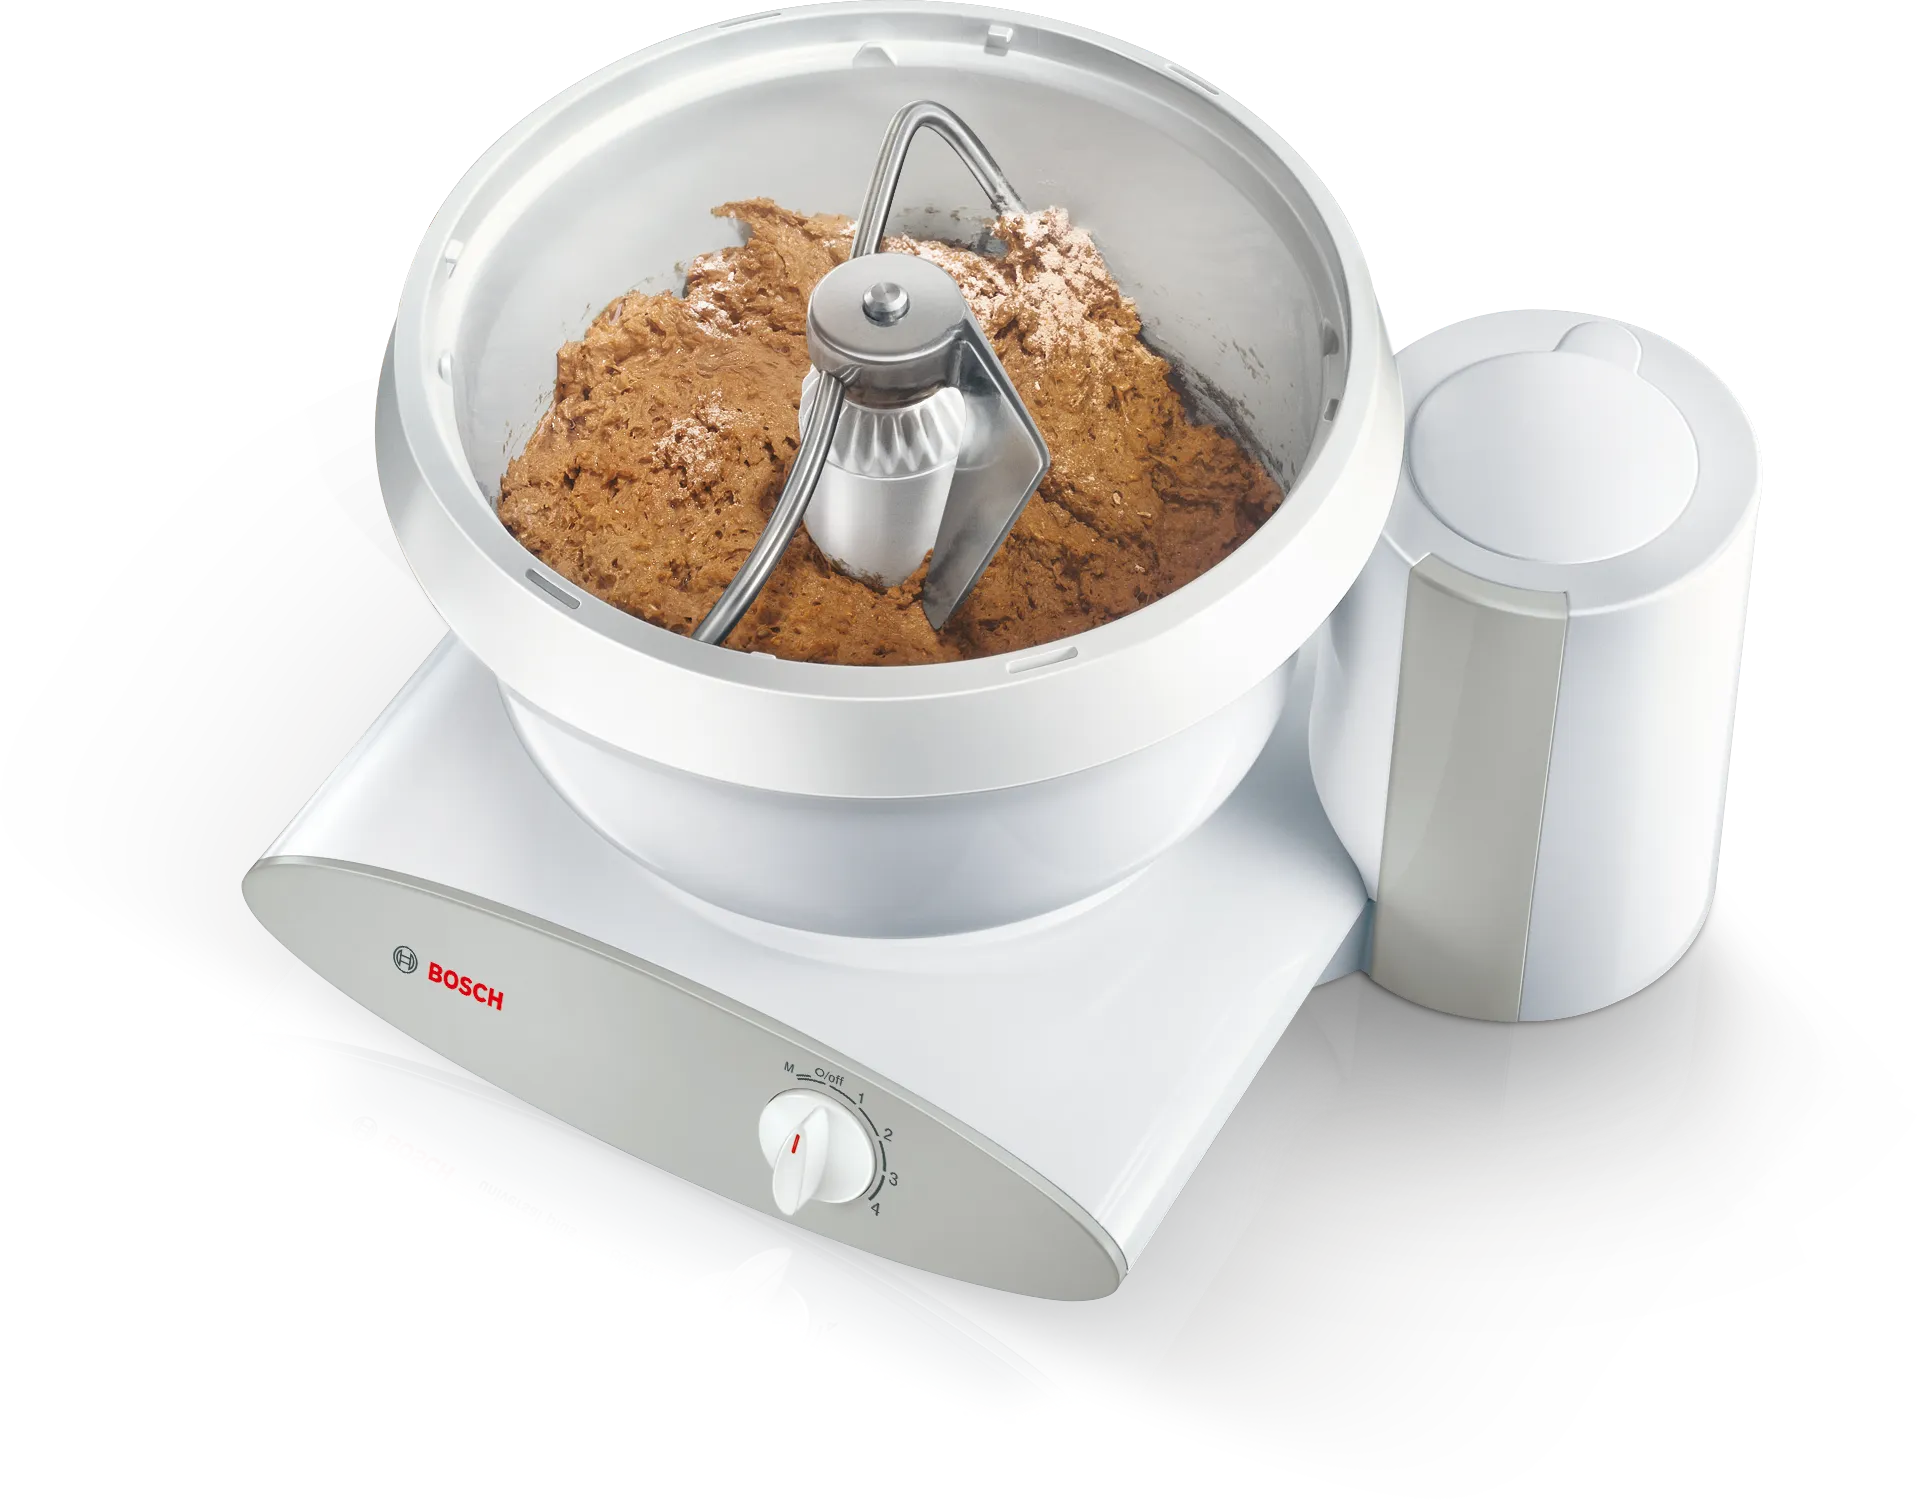  BOSCH Universal Plus Stand Mixer 500 watt, 6.5-Quarts: Electric  Stand Mixers: Home & Kitchen